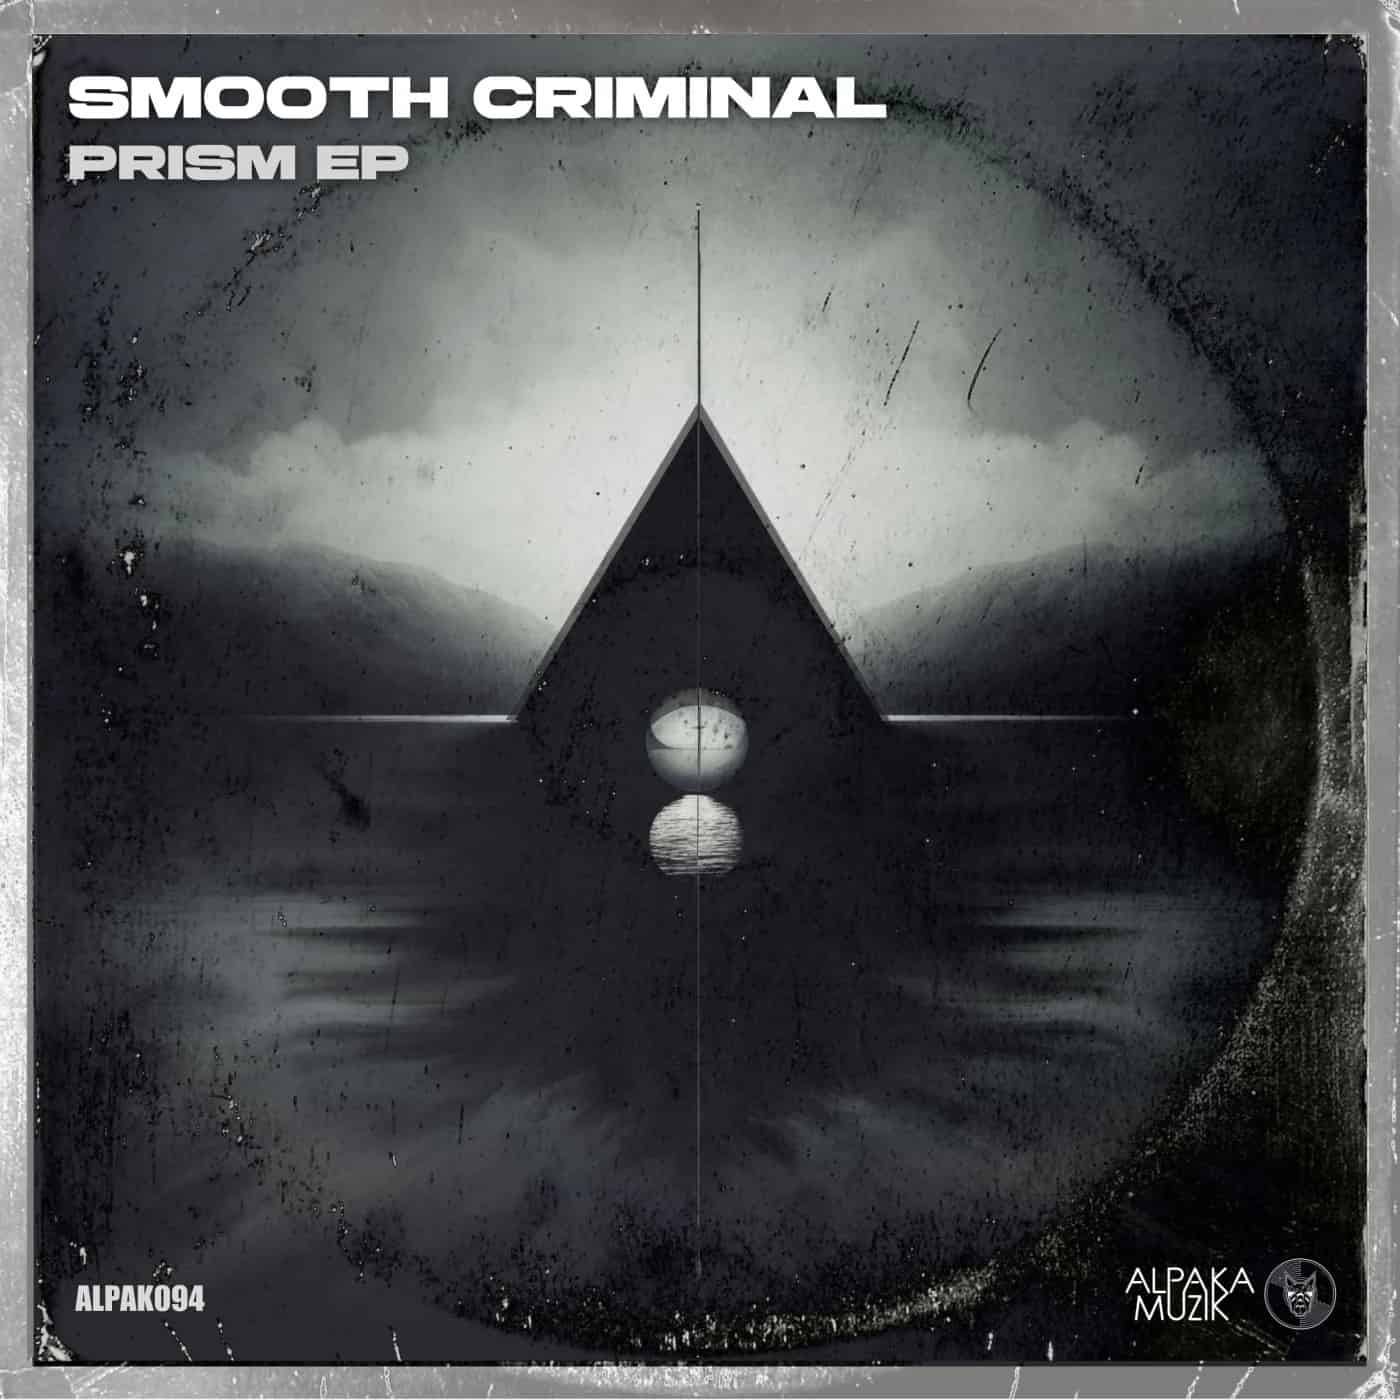 Smooth Criminal - The New World on Revolution Radio